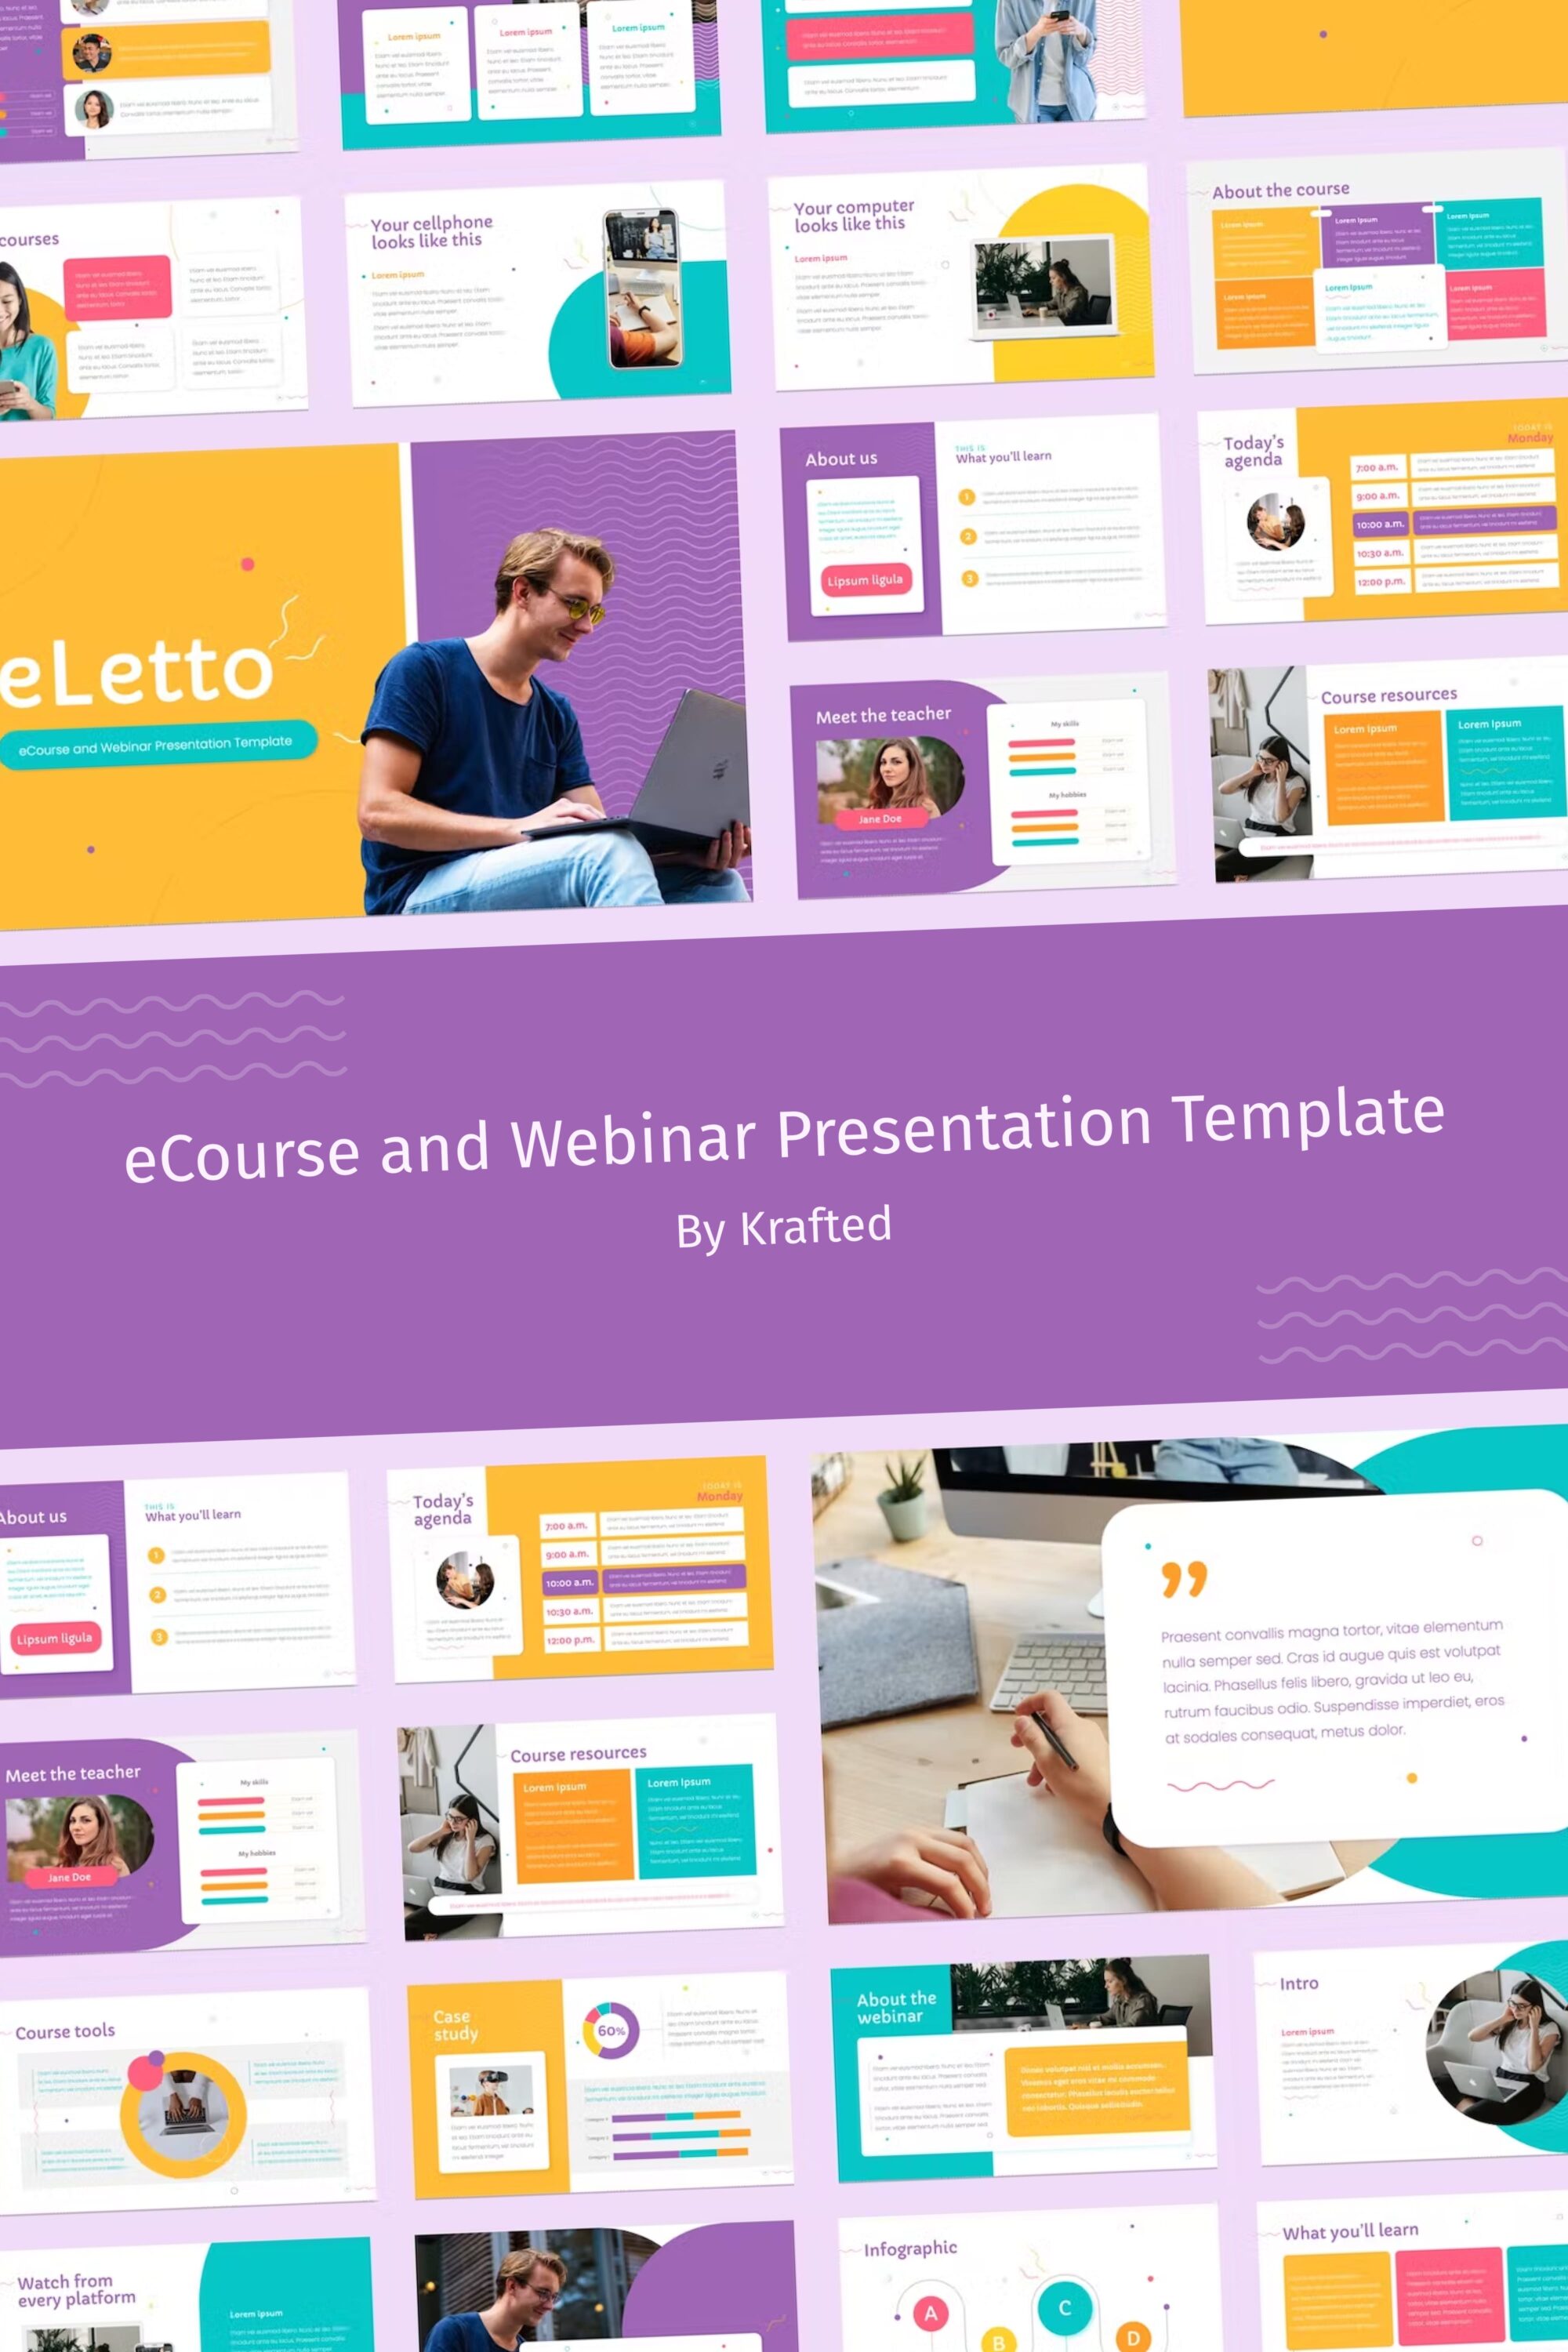 eCourse and Webinar Presentation Template - pinterest image preview.